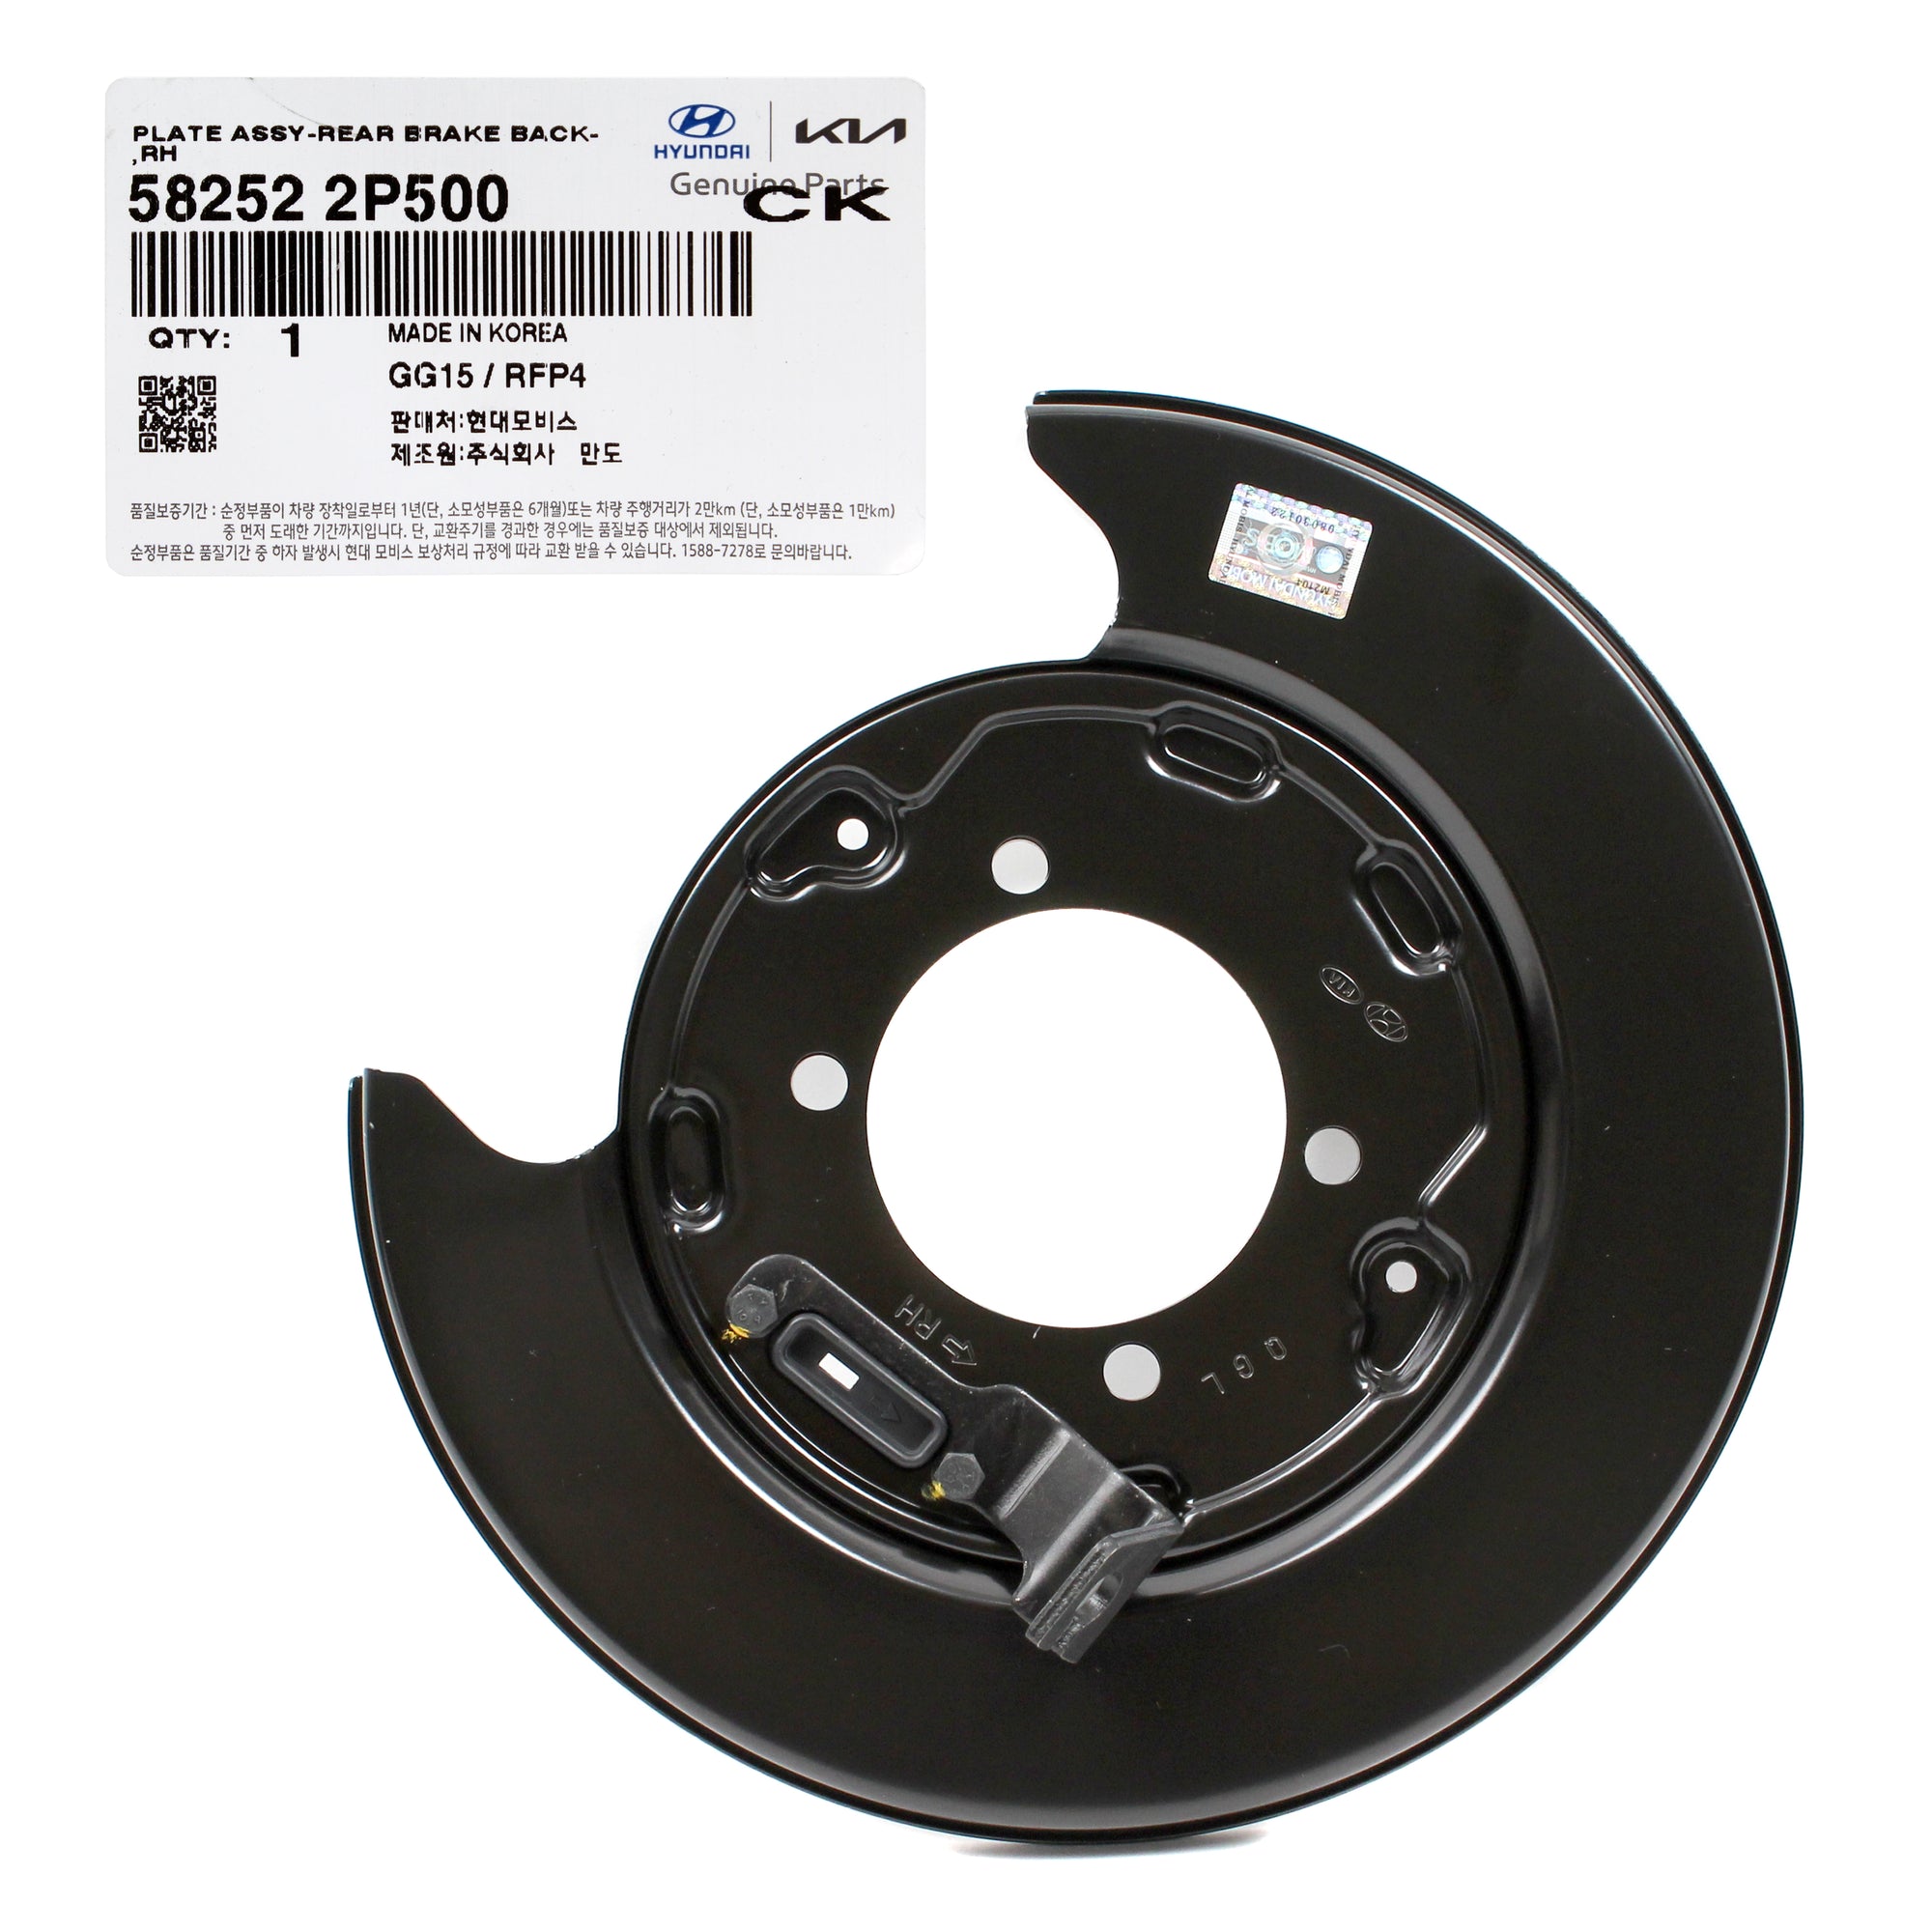 GENUINE Rear Brake Backing Plate RIGHT for 2010-13 Santa Fe Sorento 582522P500